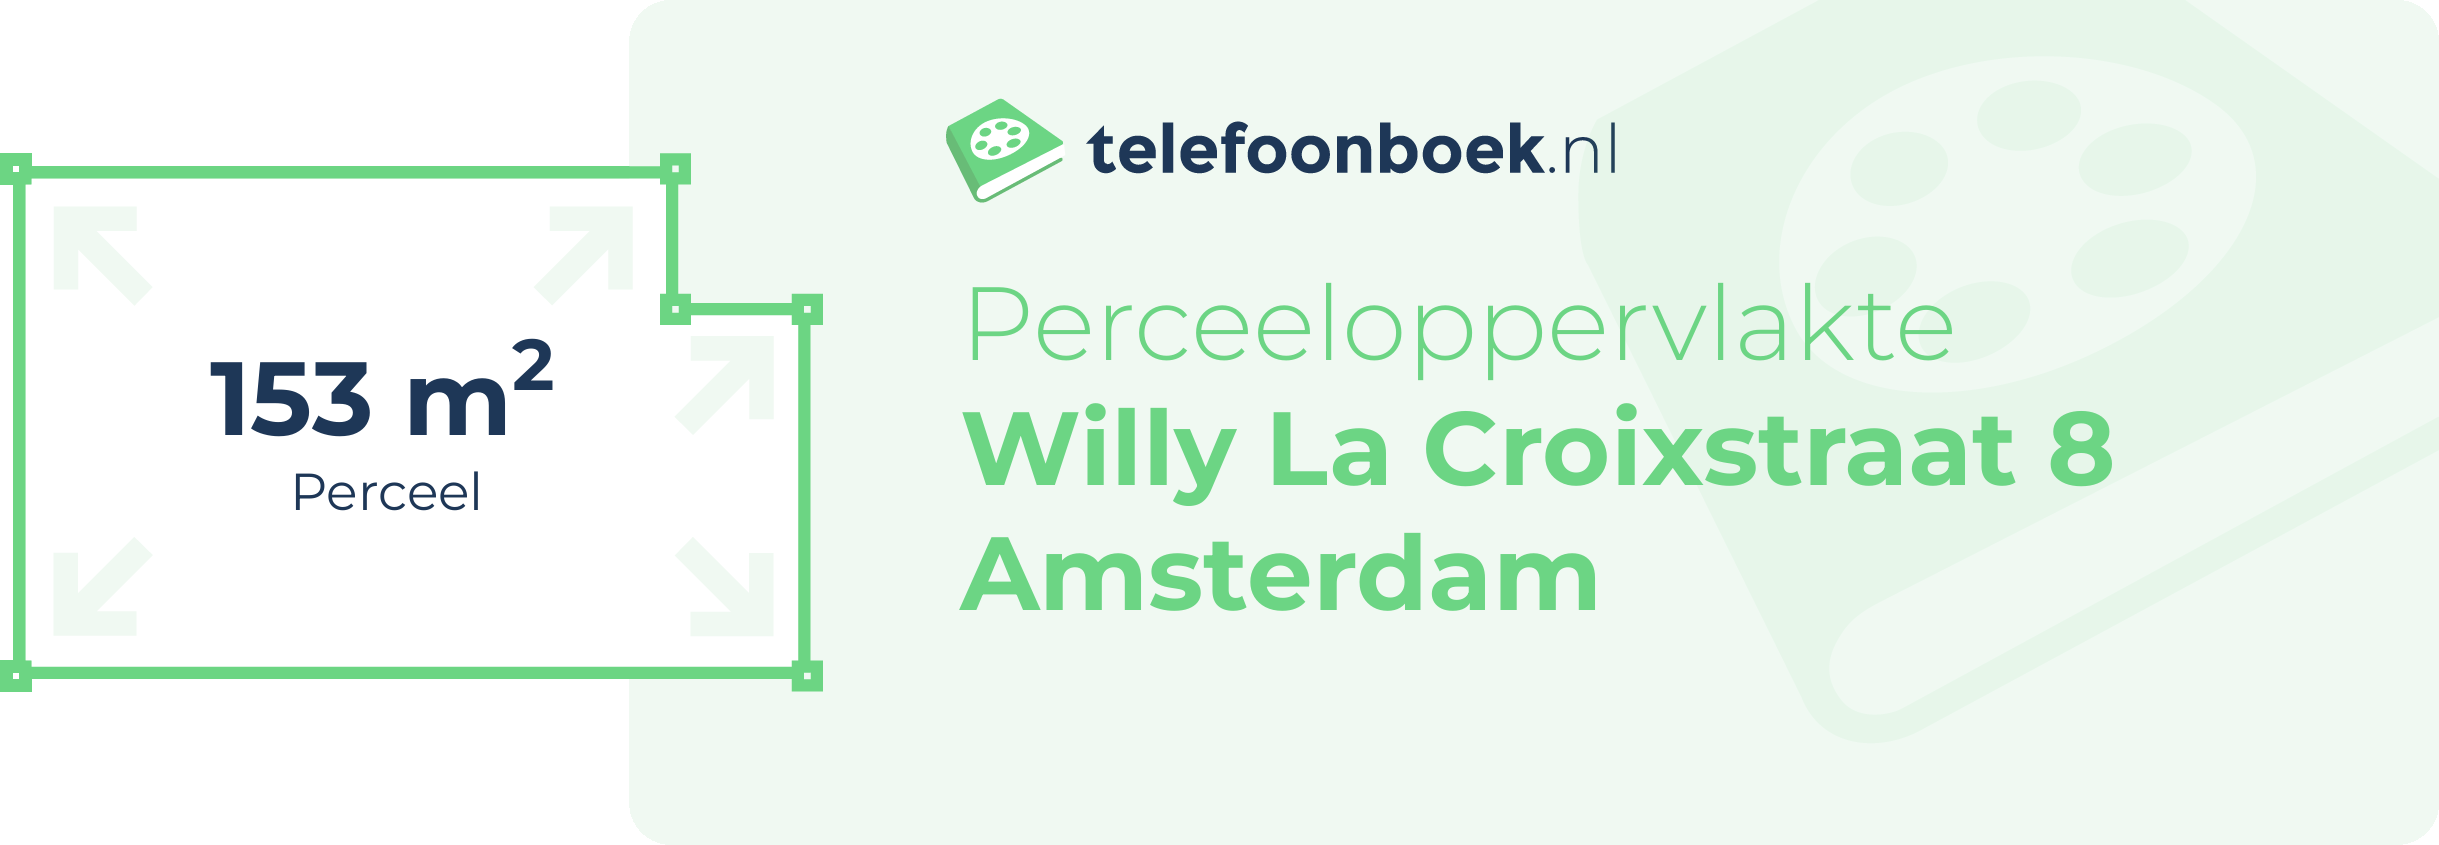 Perceeloppervlakte Willy La Croixstraat 8 Amsterdam